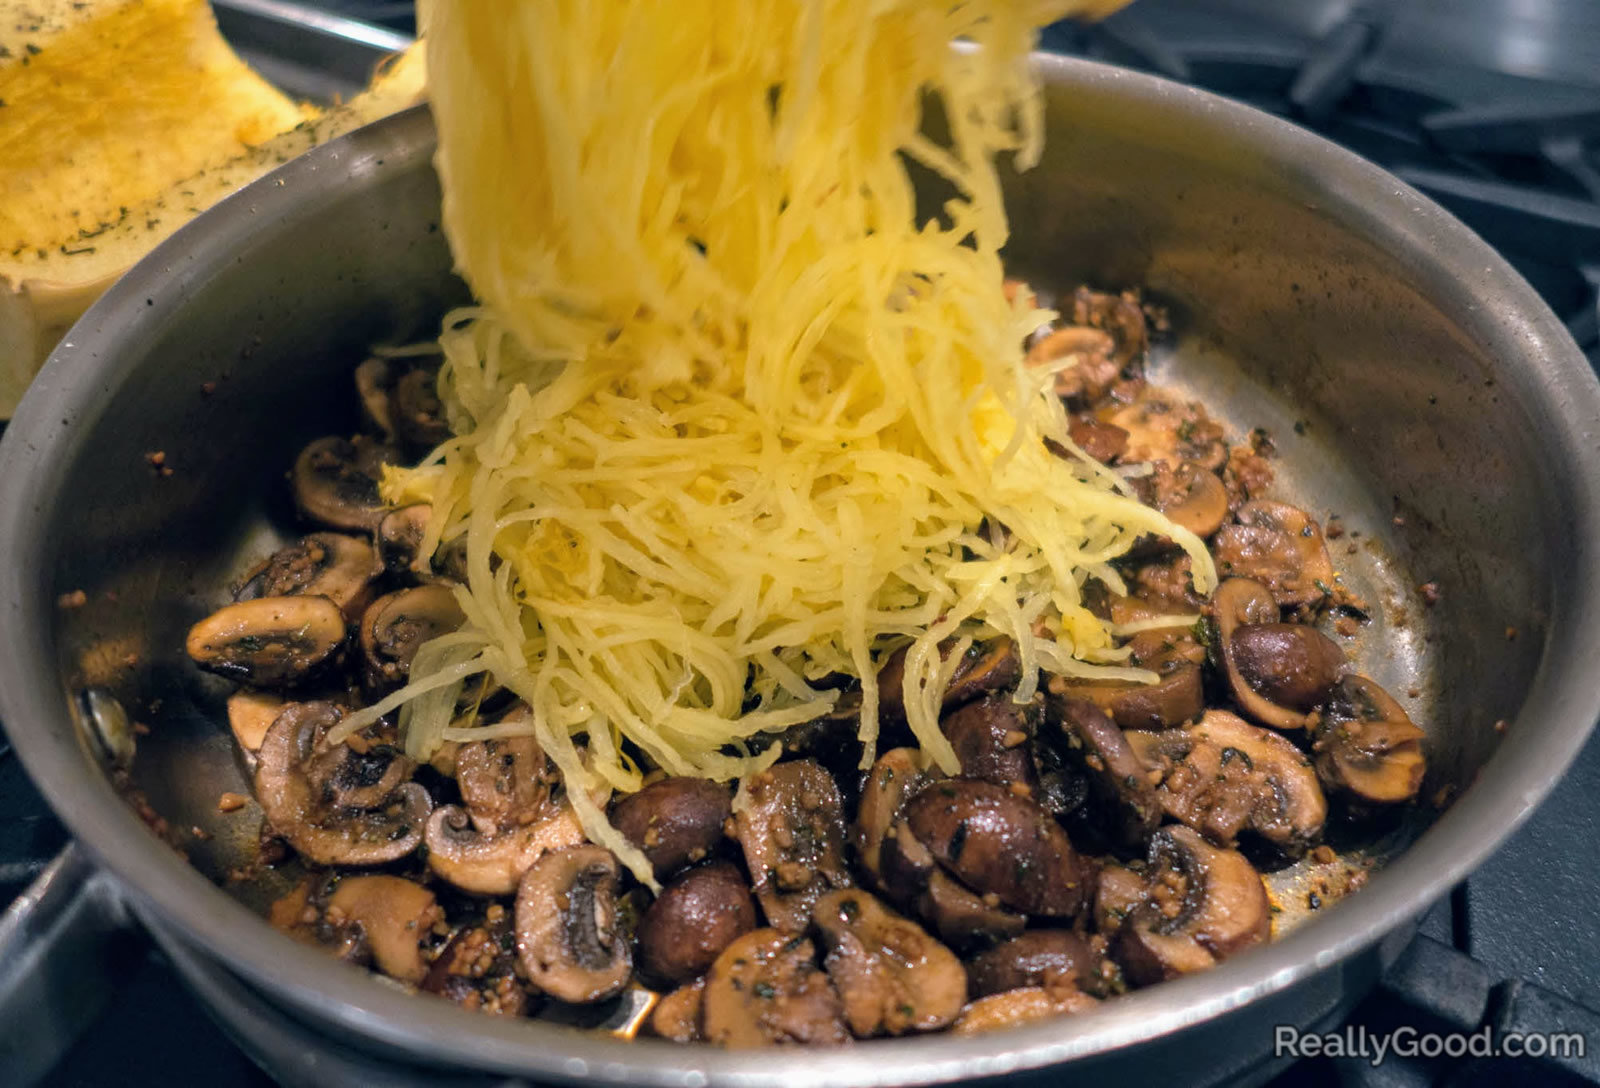 Spaghetti squash with mushrooms